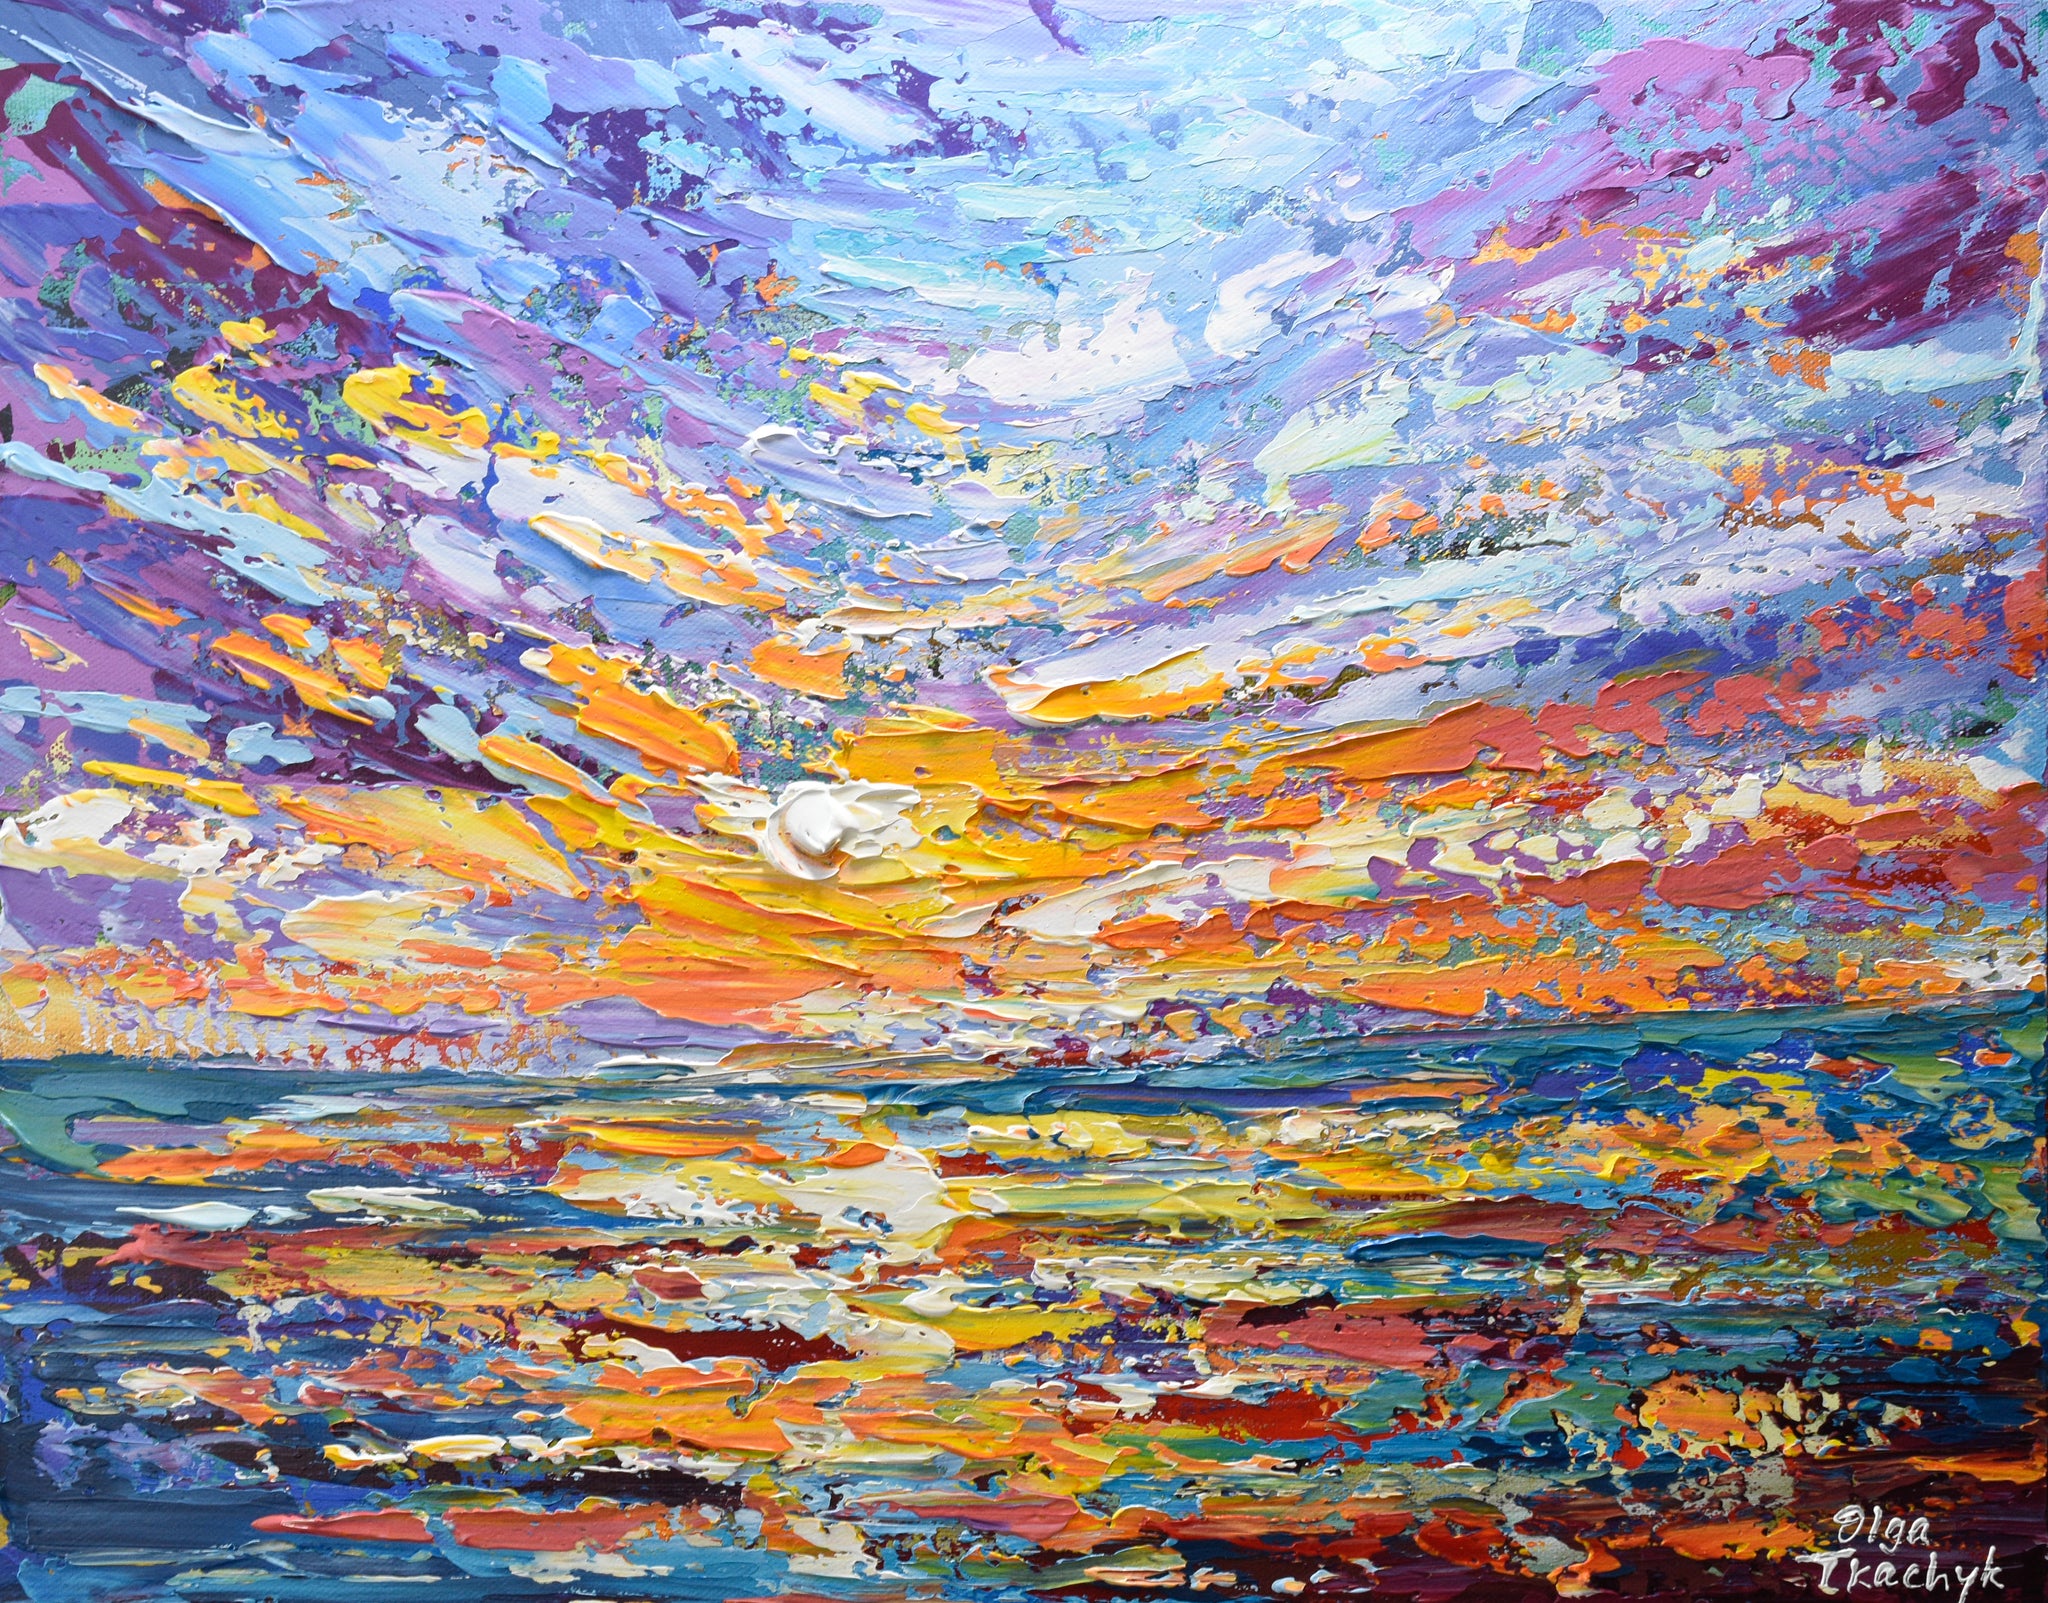 Lavender sky, Seascape Sunset Painting, Textured Palette knife Acrylic Artwork on Canvas by Olga Tkachyk